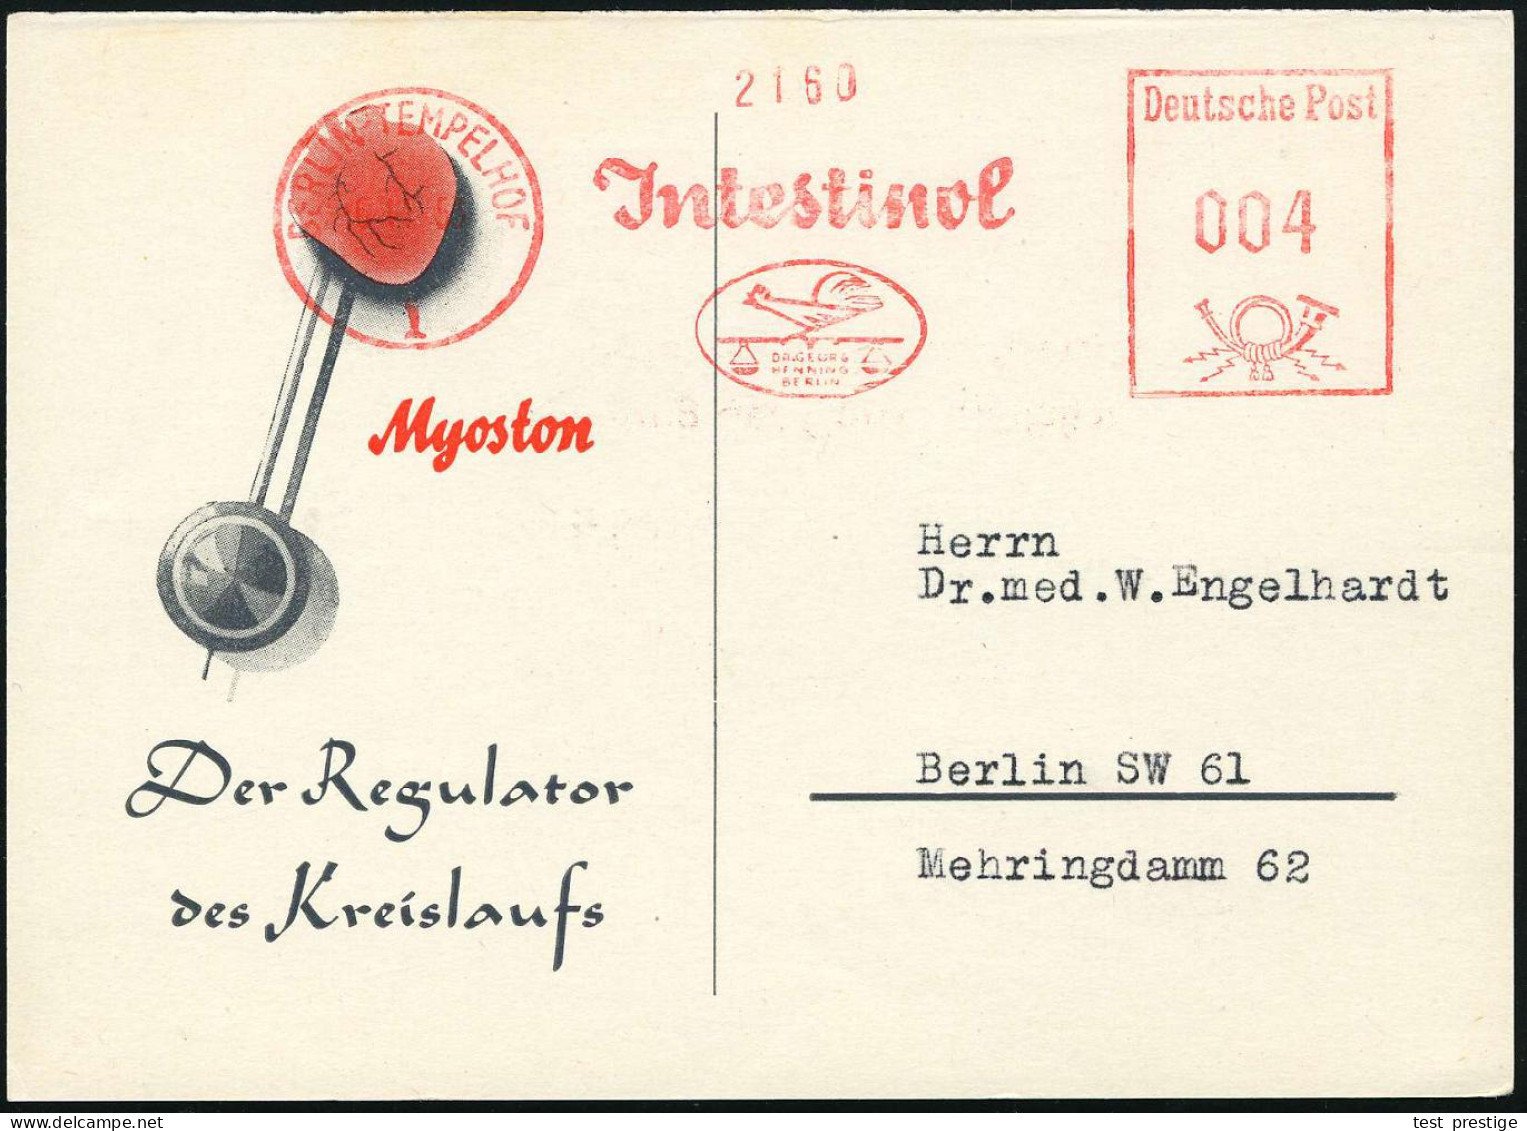 BERLIN-TEMPELHOF/ 1/ Jntestinol.. 1953 (16.11.) AFS (Logo: Hahn Auf Waage) Color-Reklame-Kt.: Myoston.. (Herz Als Uhr) O - Medicina